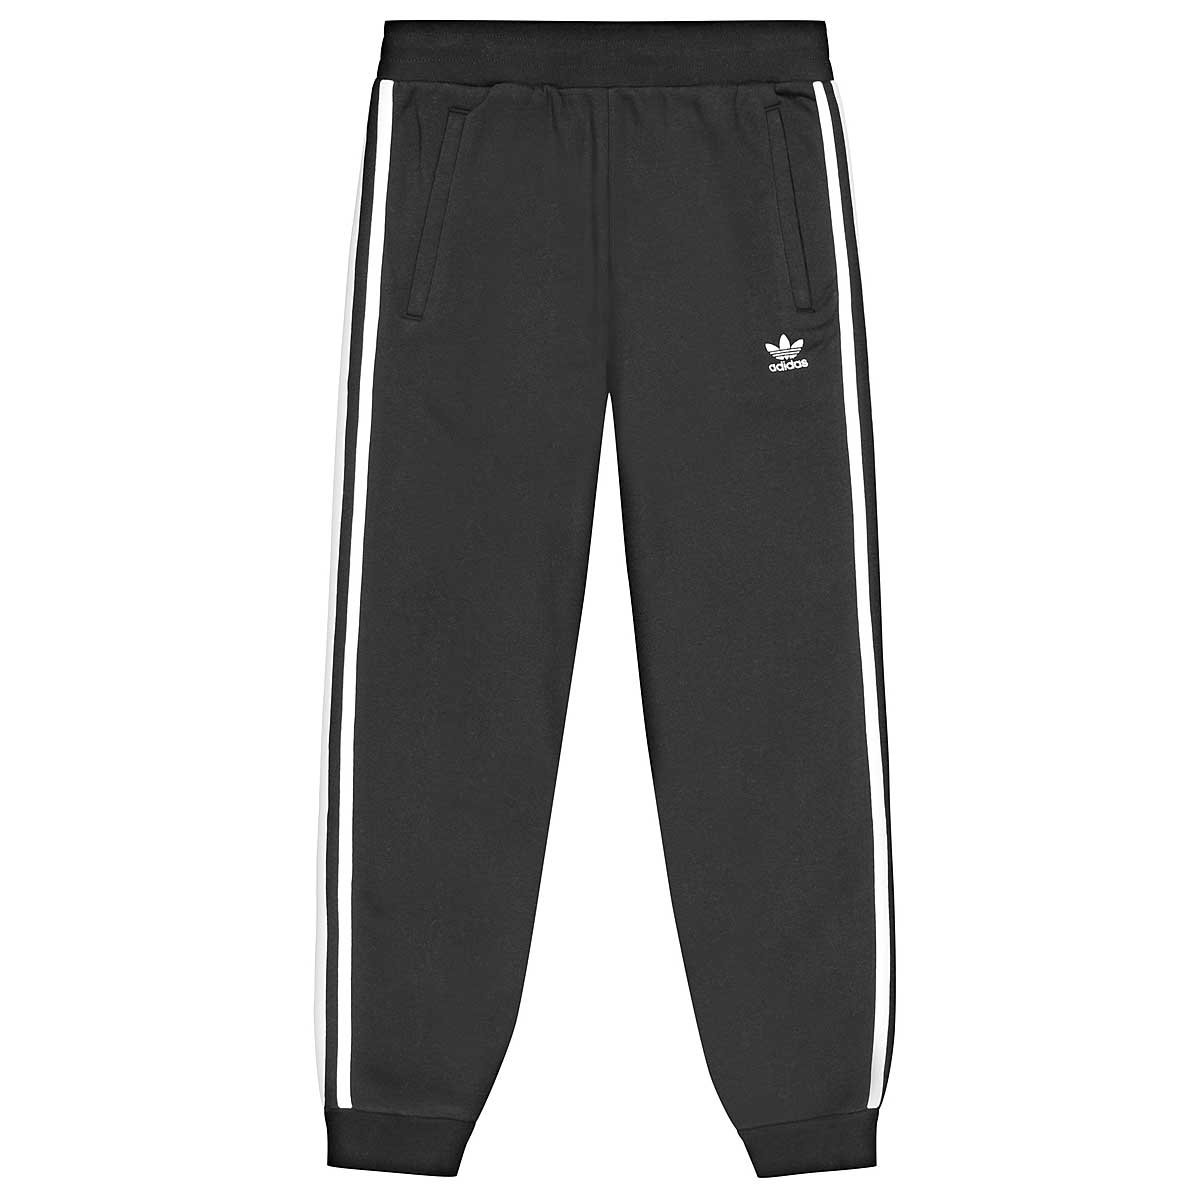 Adidas Originals 3-Stripes Pant, Black